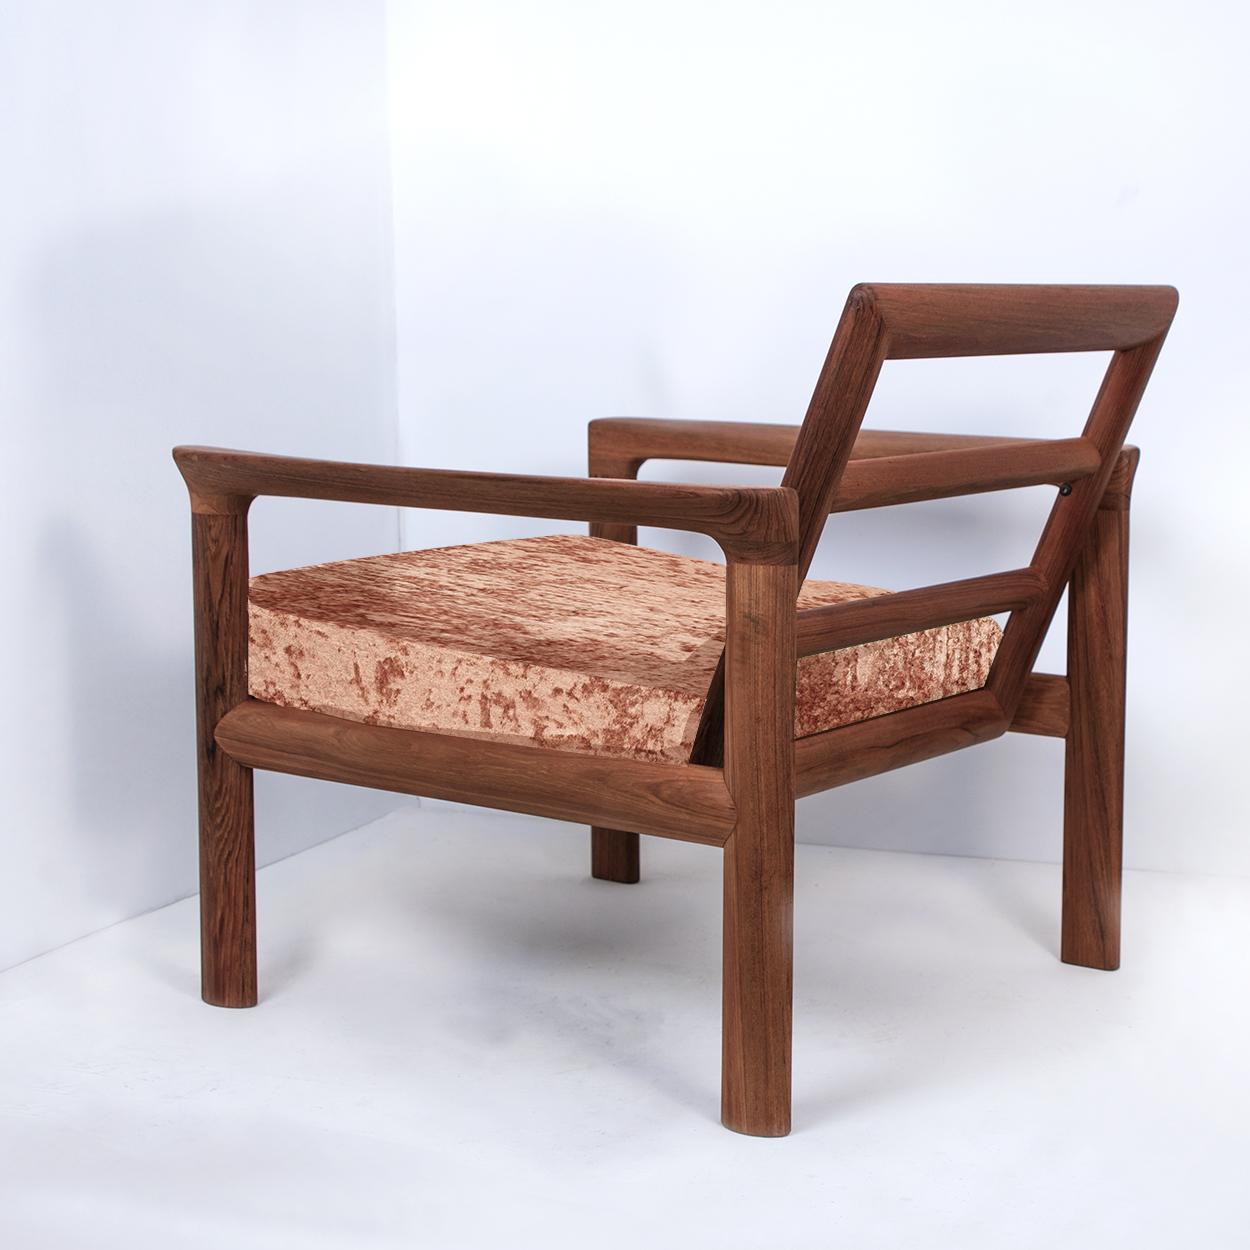 20th Century Pair of New Velvet Upholstered Sculptural Easy Chairs by Sven Ellekaer, 1960s For Sale